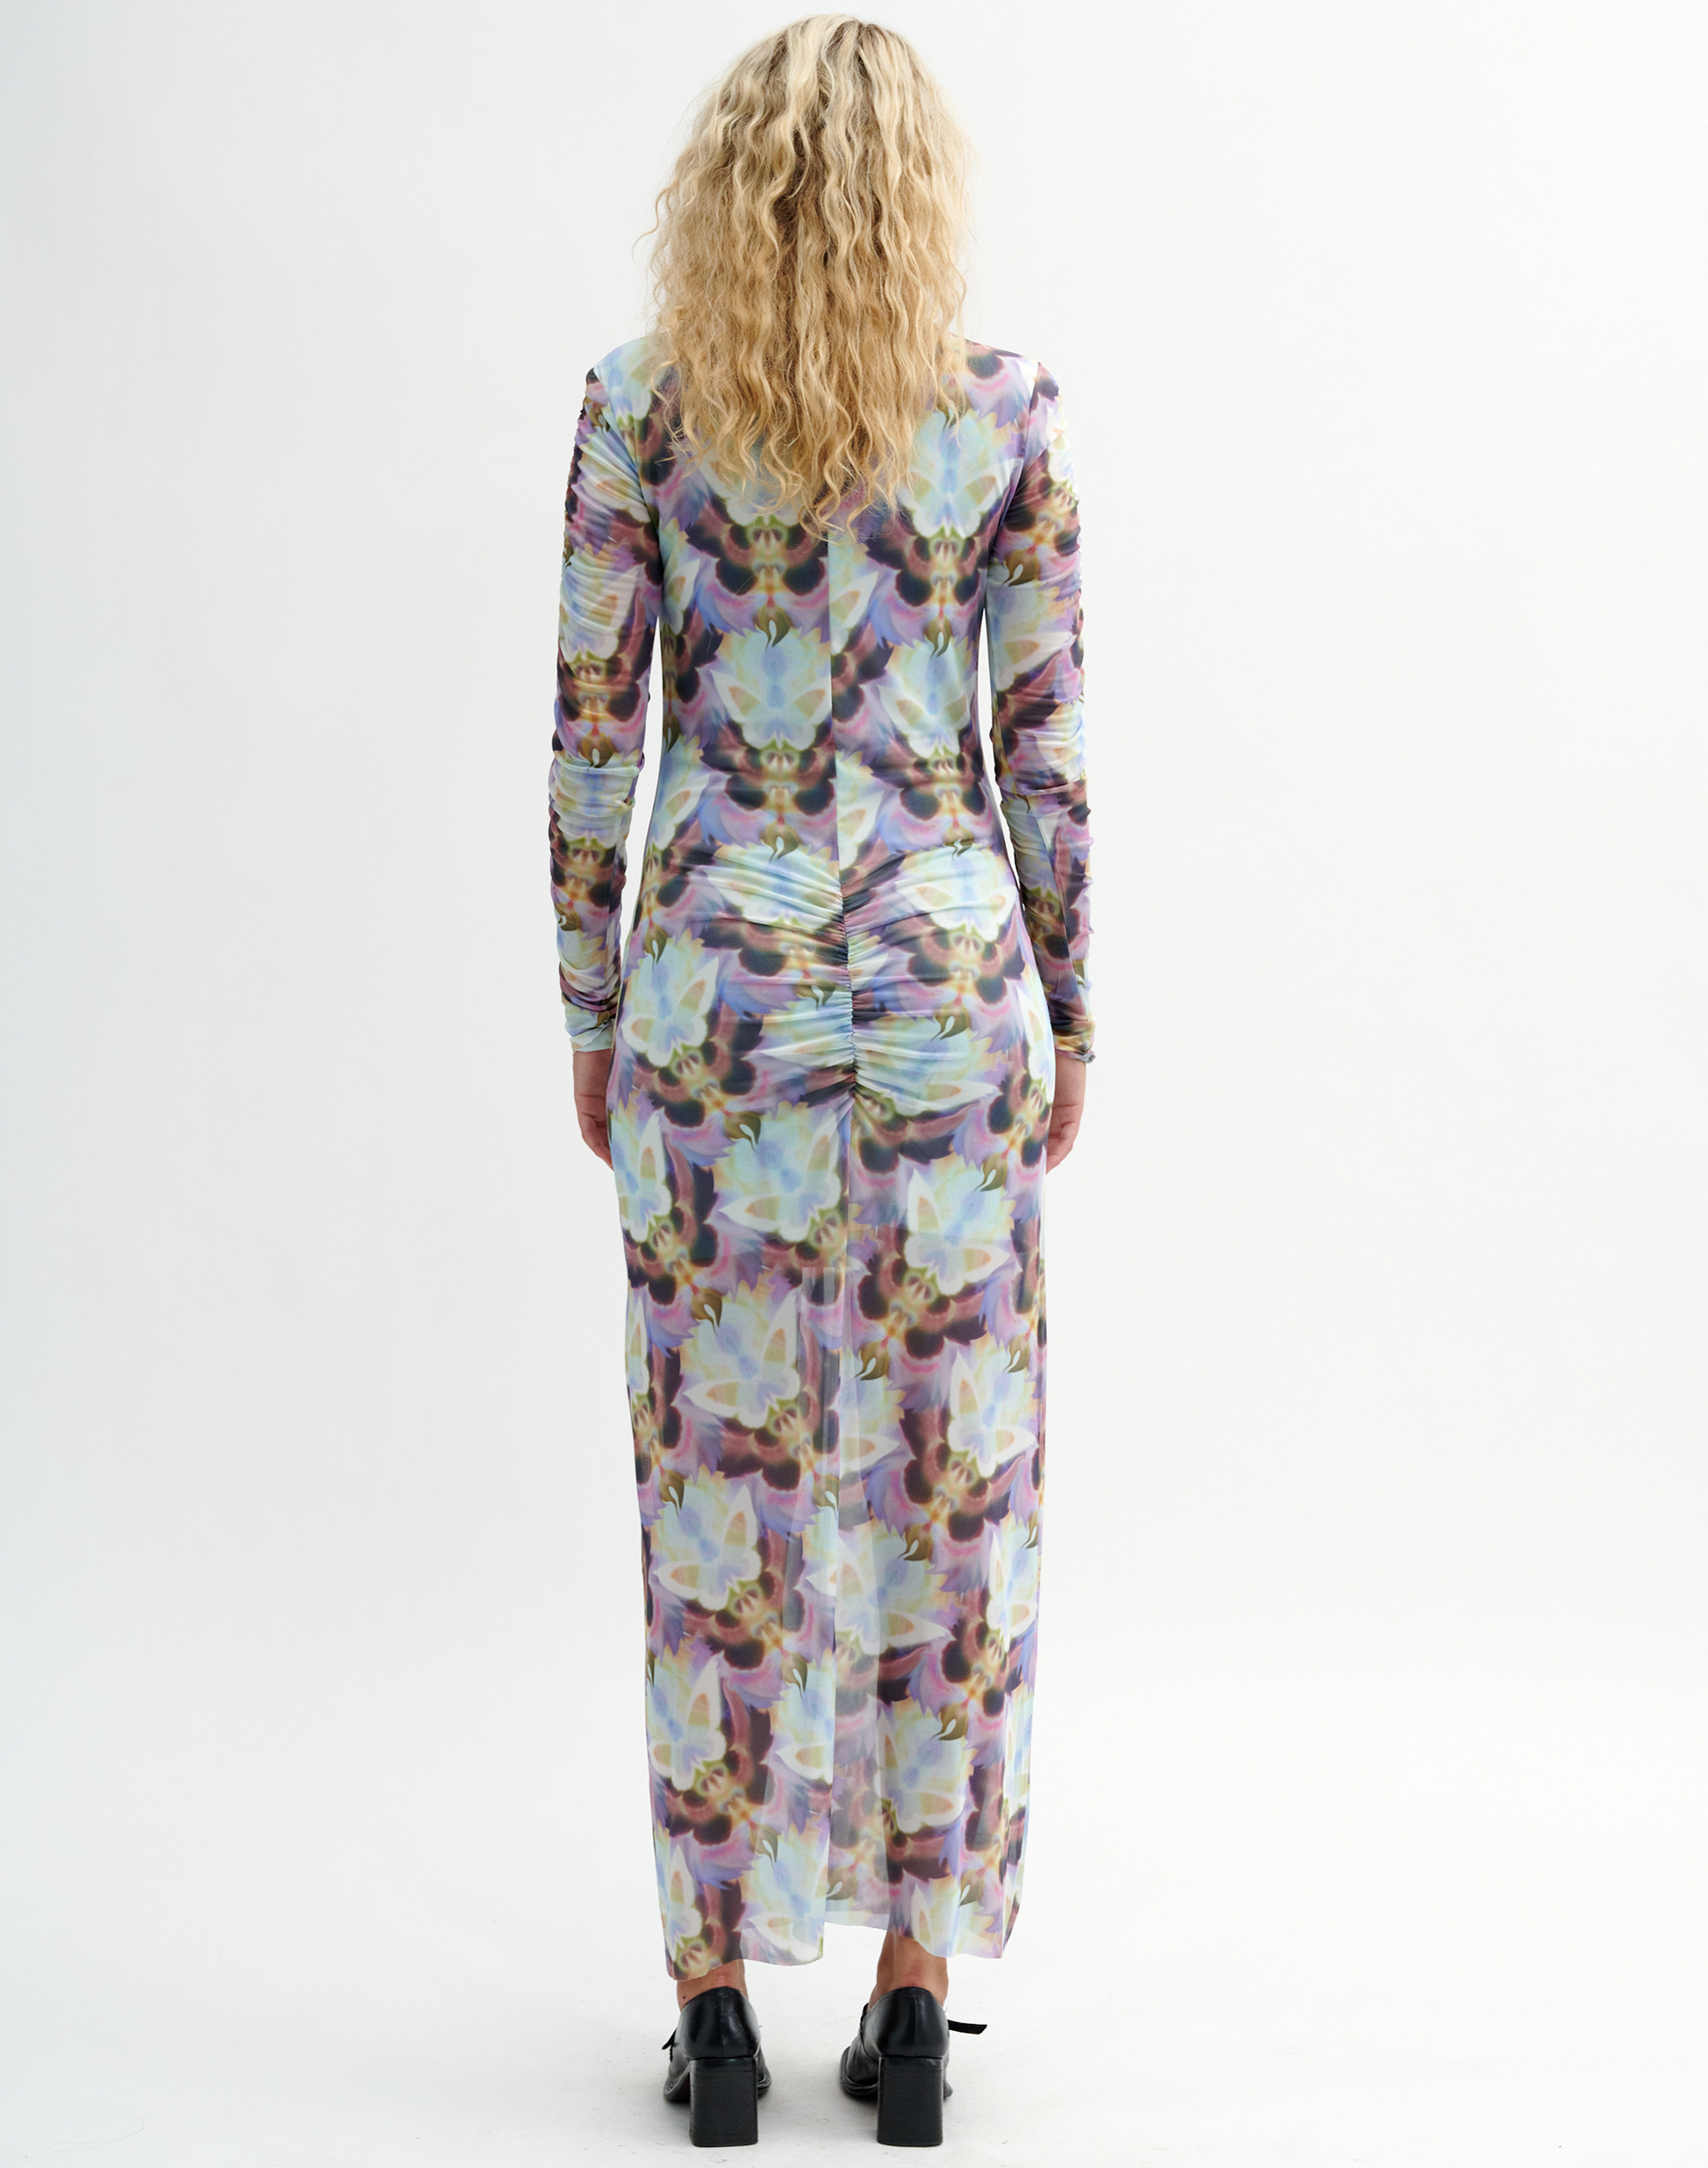 RESUME Althea Kleid in Multi Colour, Tragebild Hinten